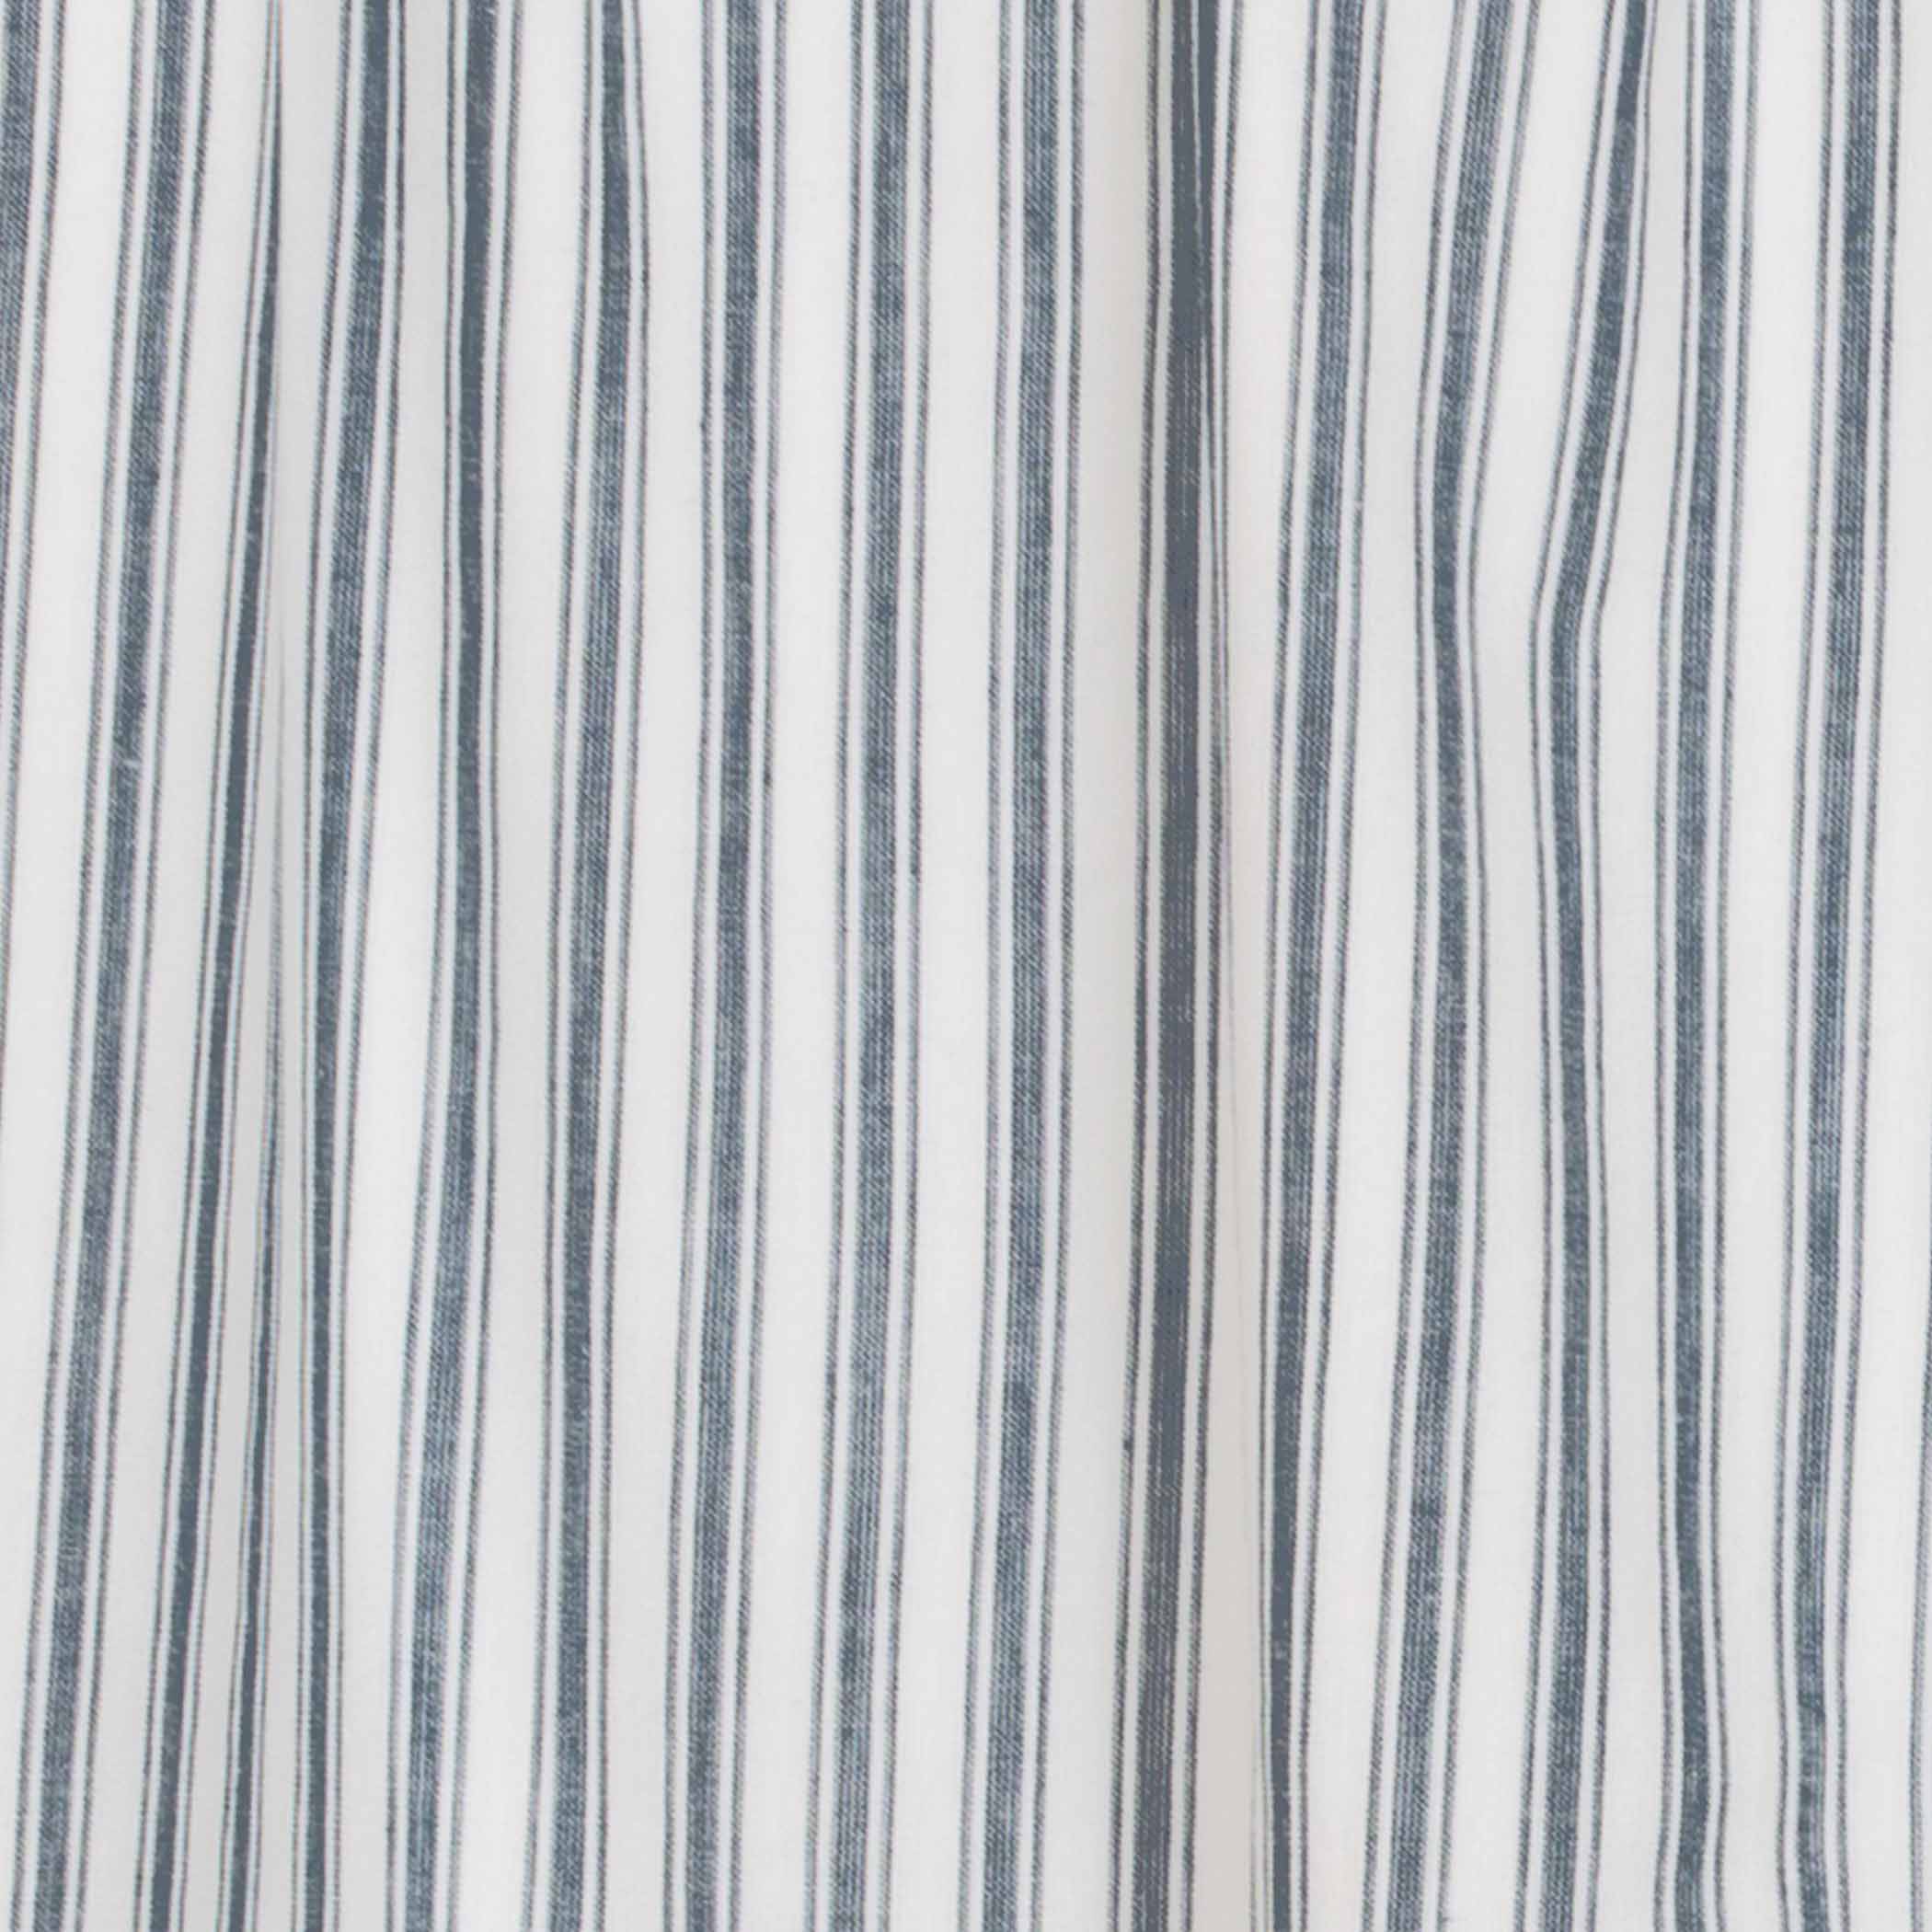 Sawyer Mill Blue Ticking Stripe Short Panel Set of 2 63x36